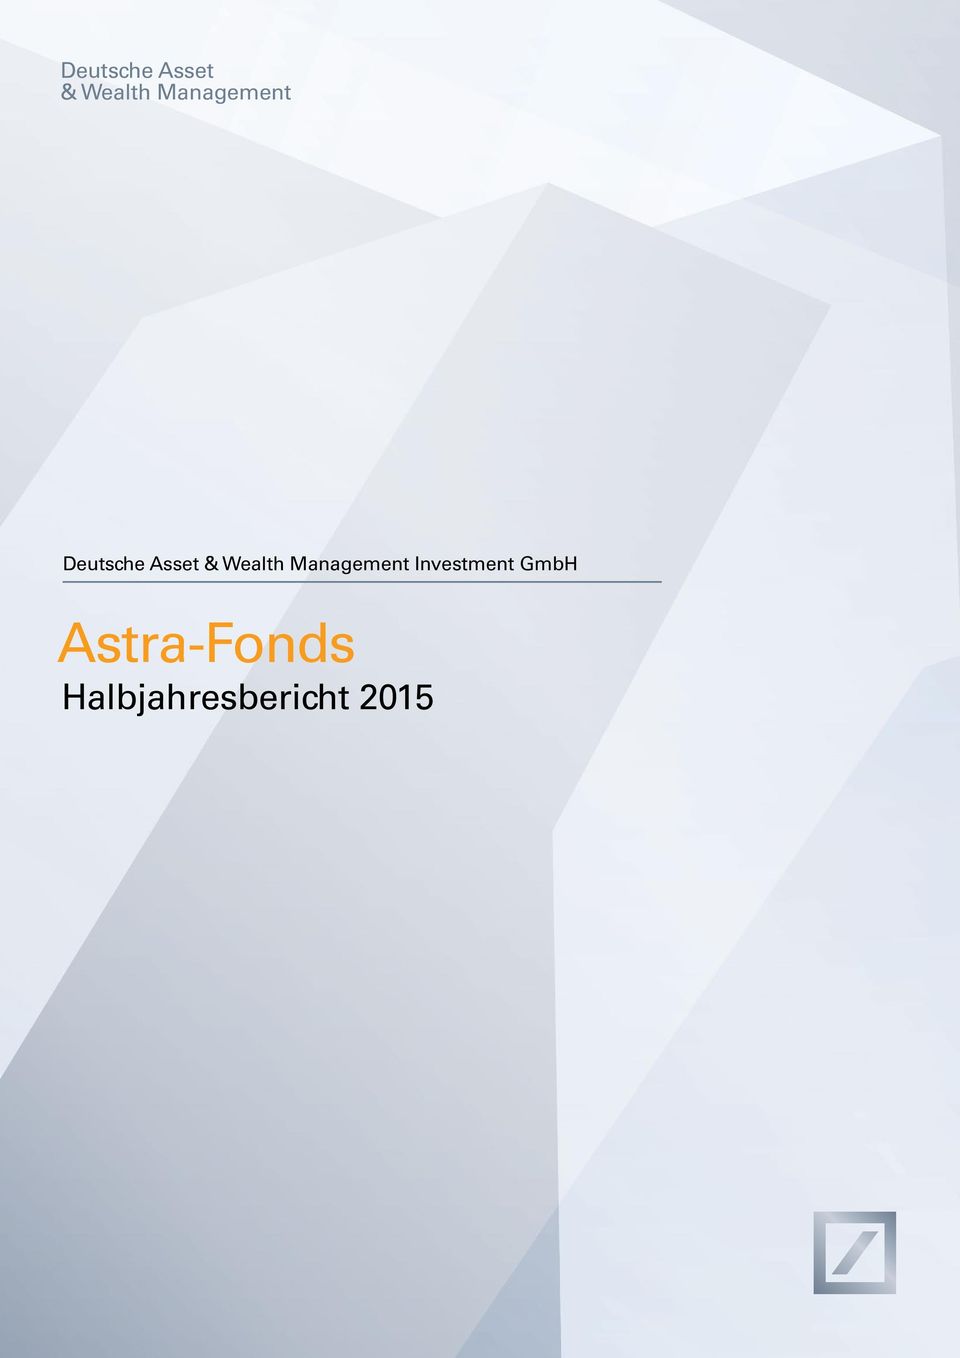 Investment GmbH Astra-Fonds